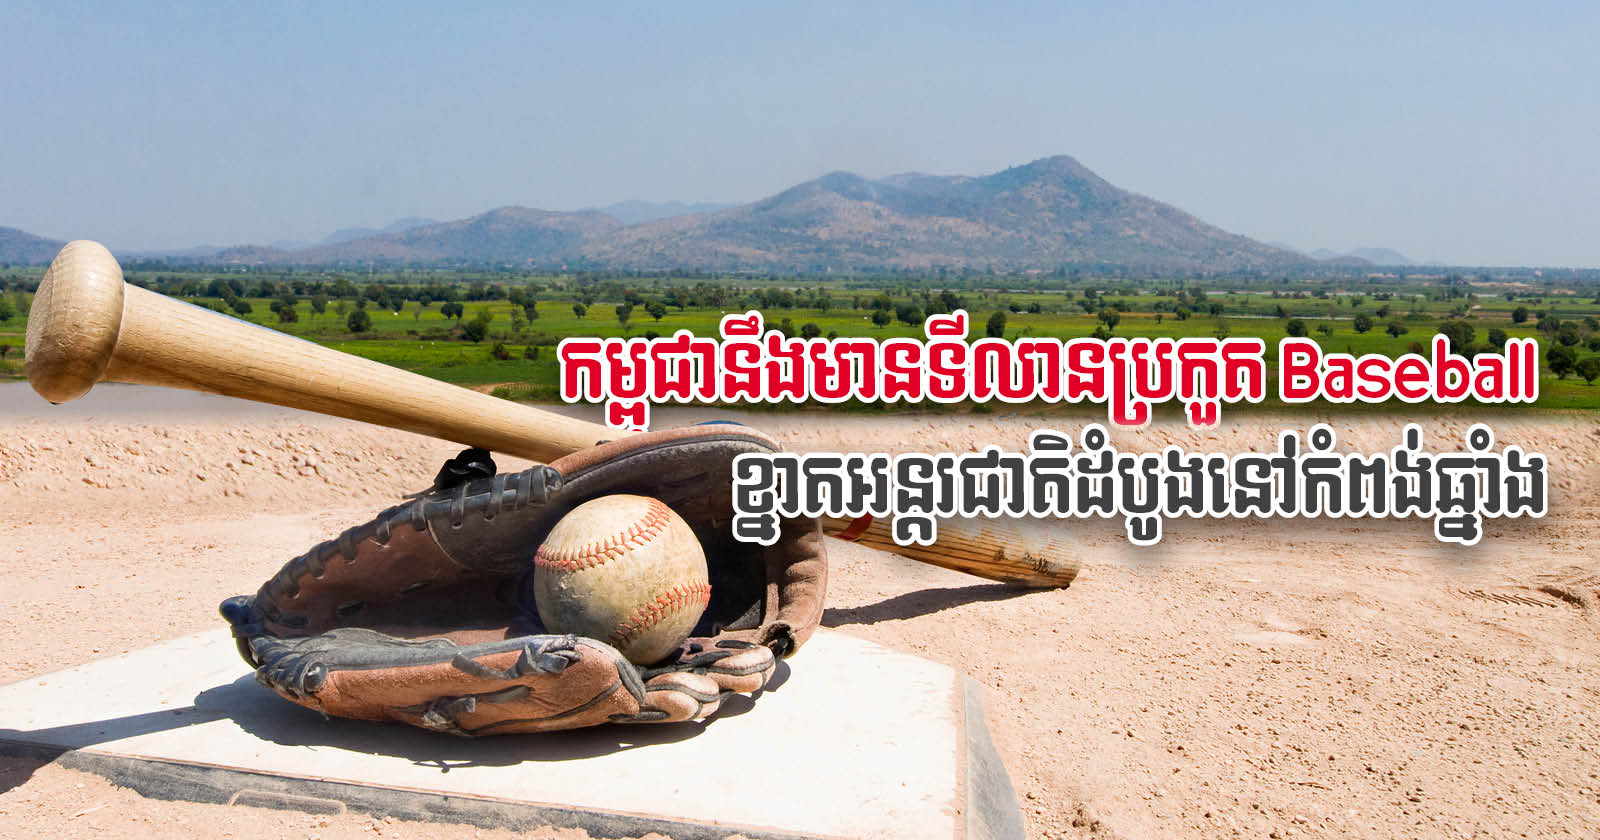 Cambodia’s first international standard baseball court set for Kampong Chhnang